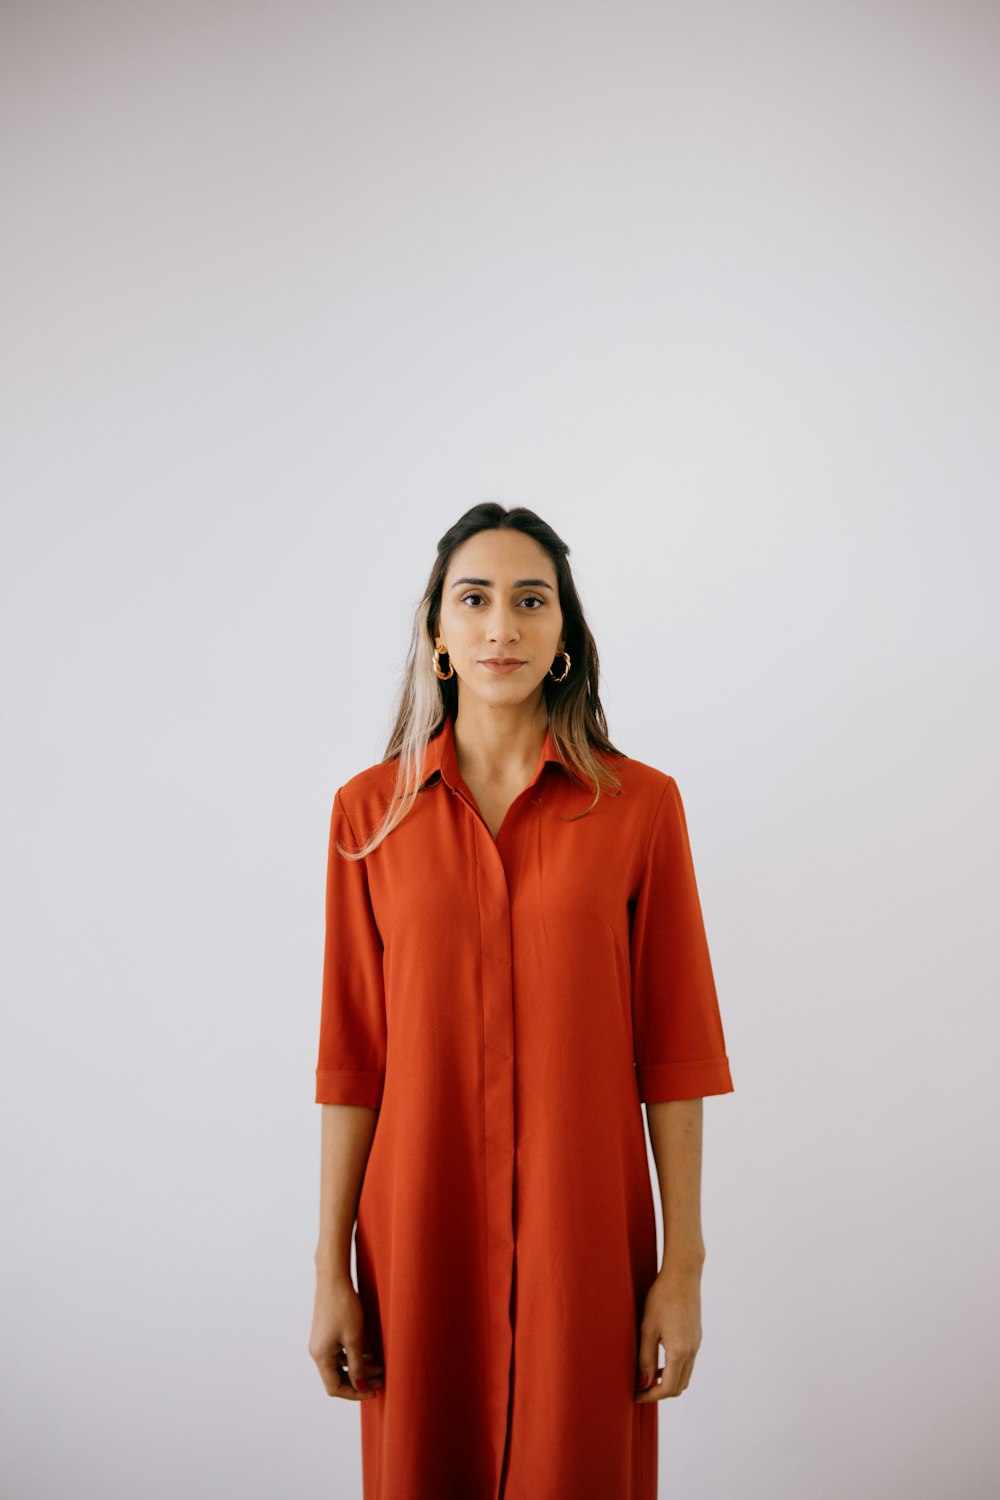 a woman wearing an orange shirt dress